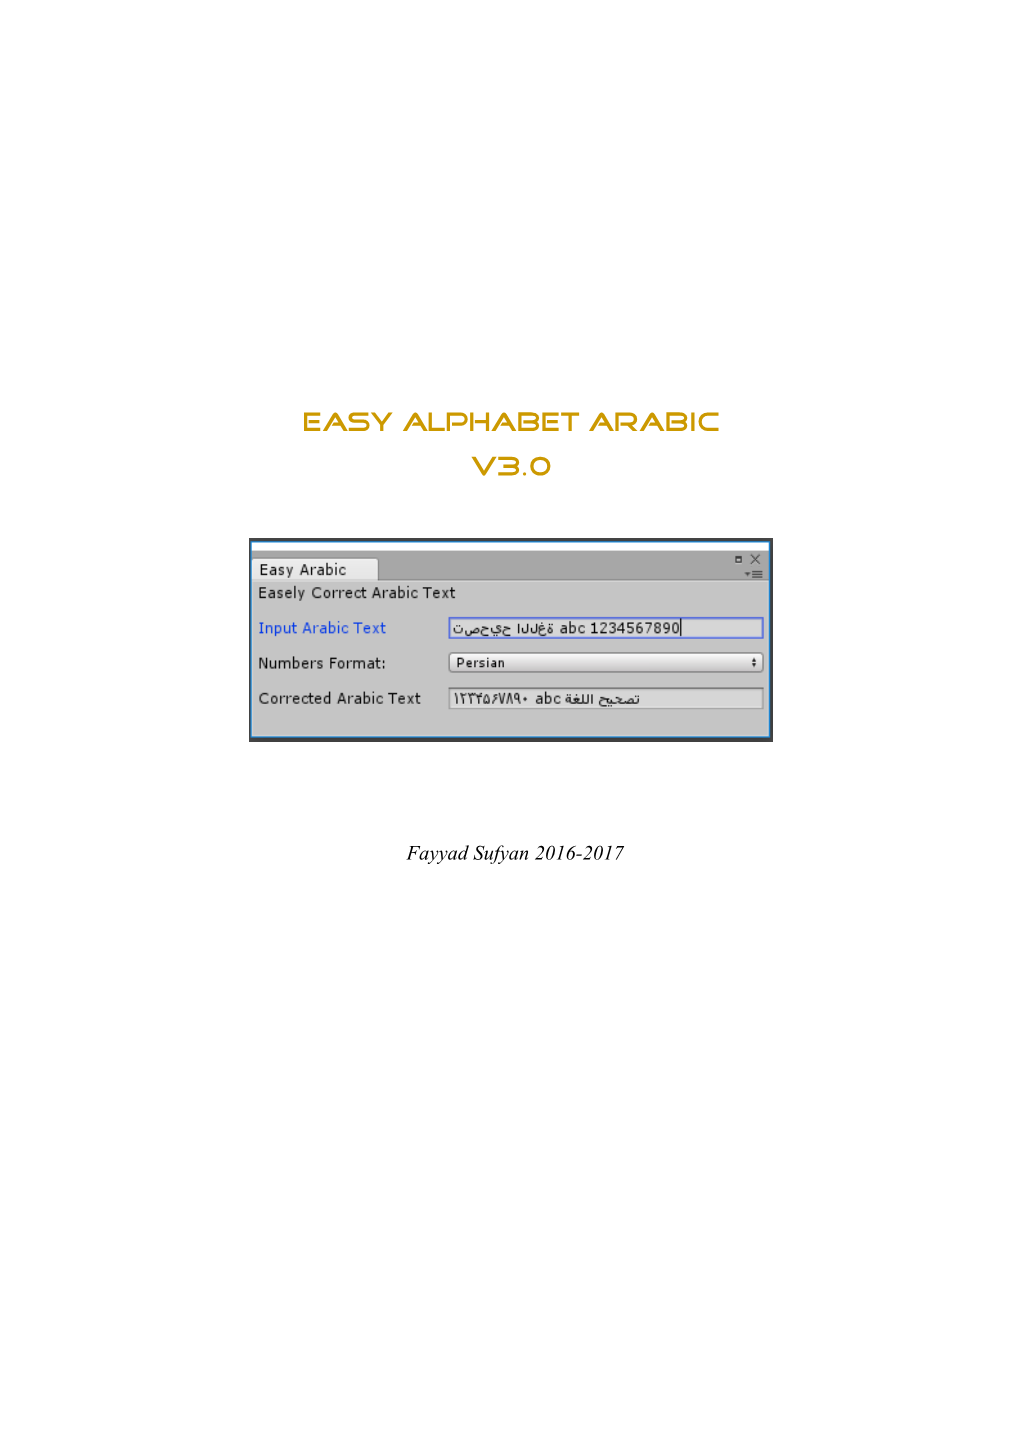 Easy Alphabet Arabic V3.0